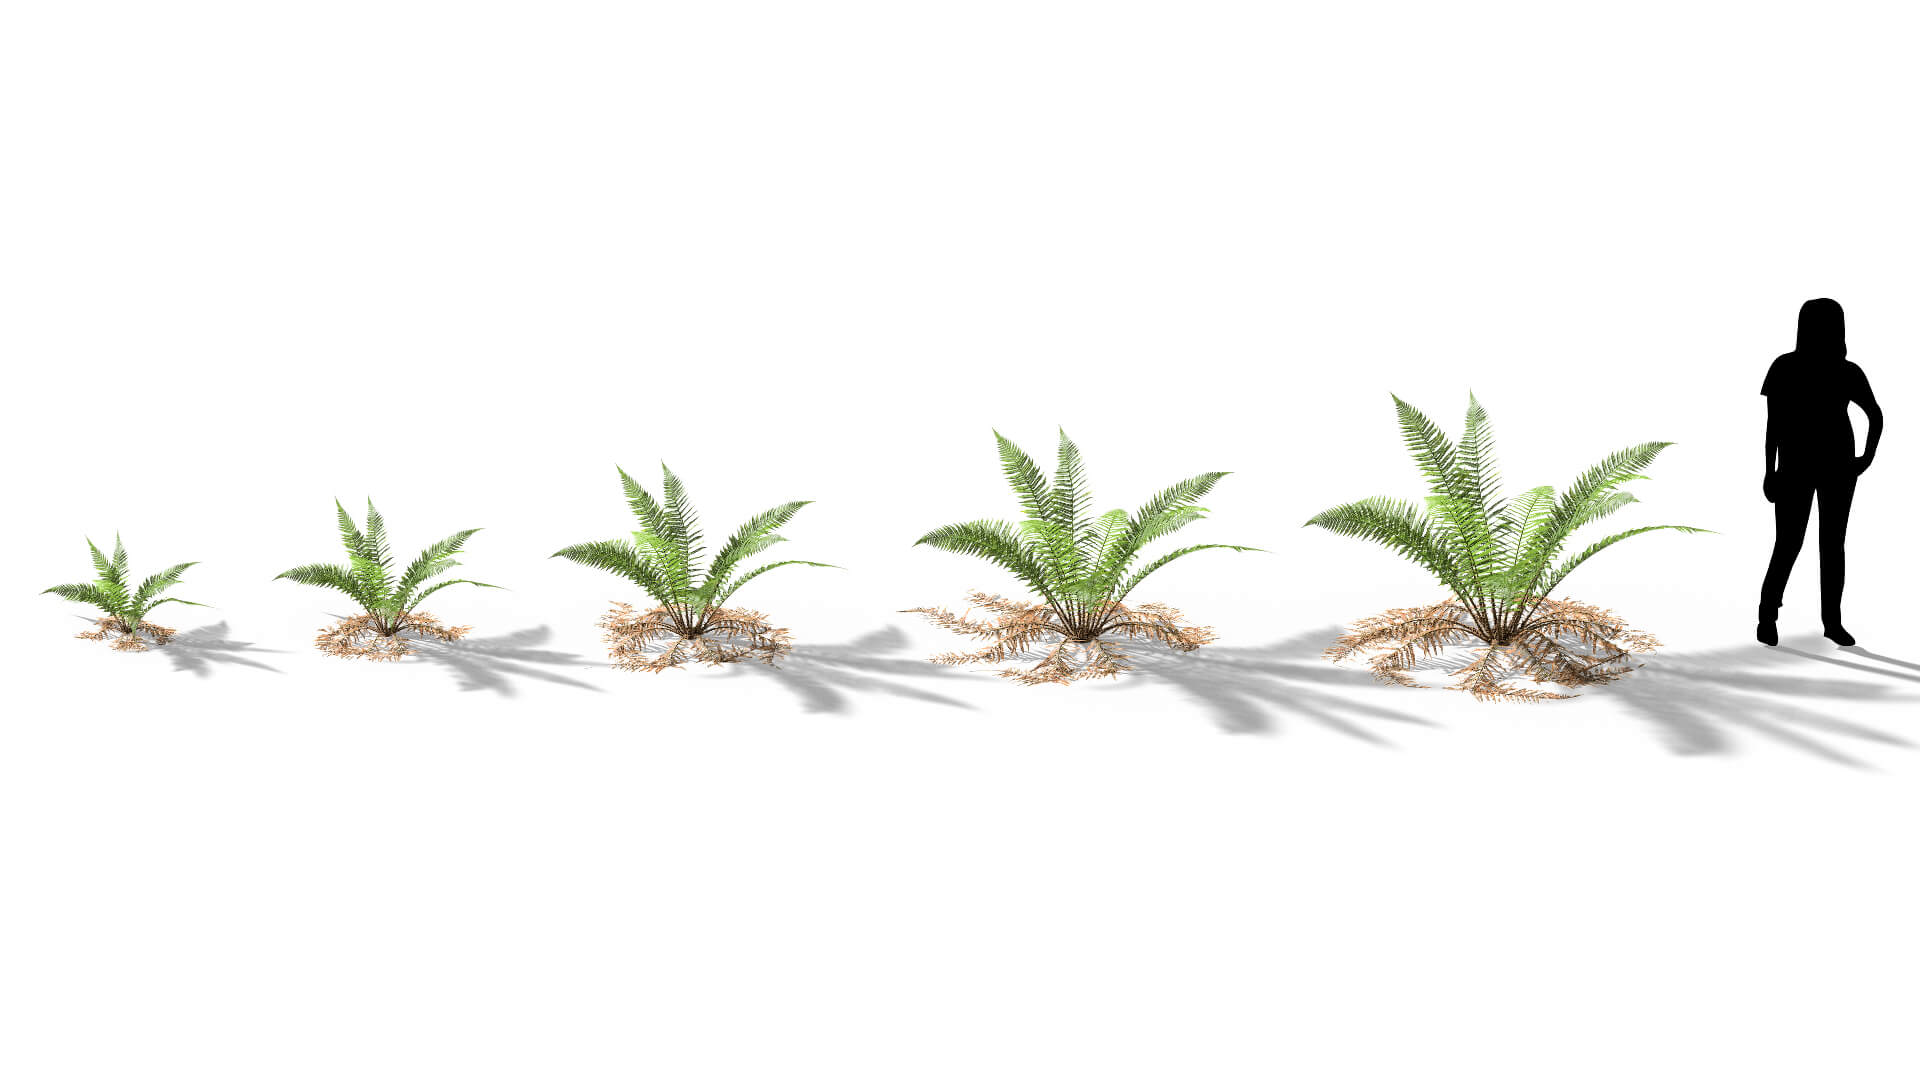 3D model of the Male fern Dryopteris filix-mas maturity variations